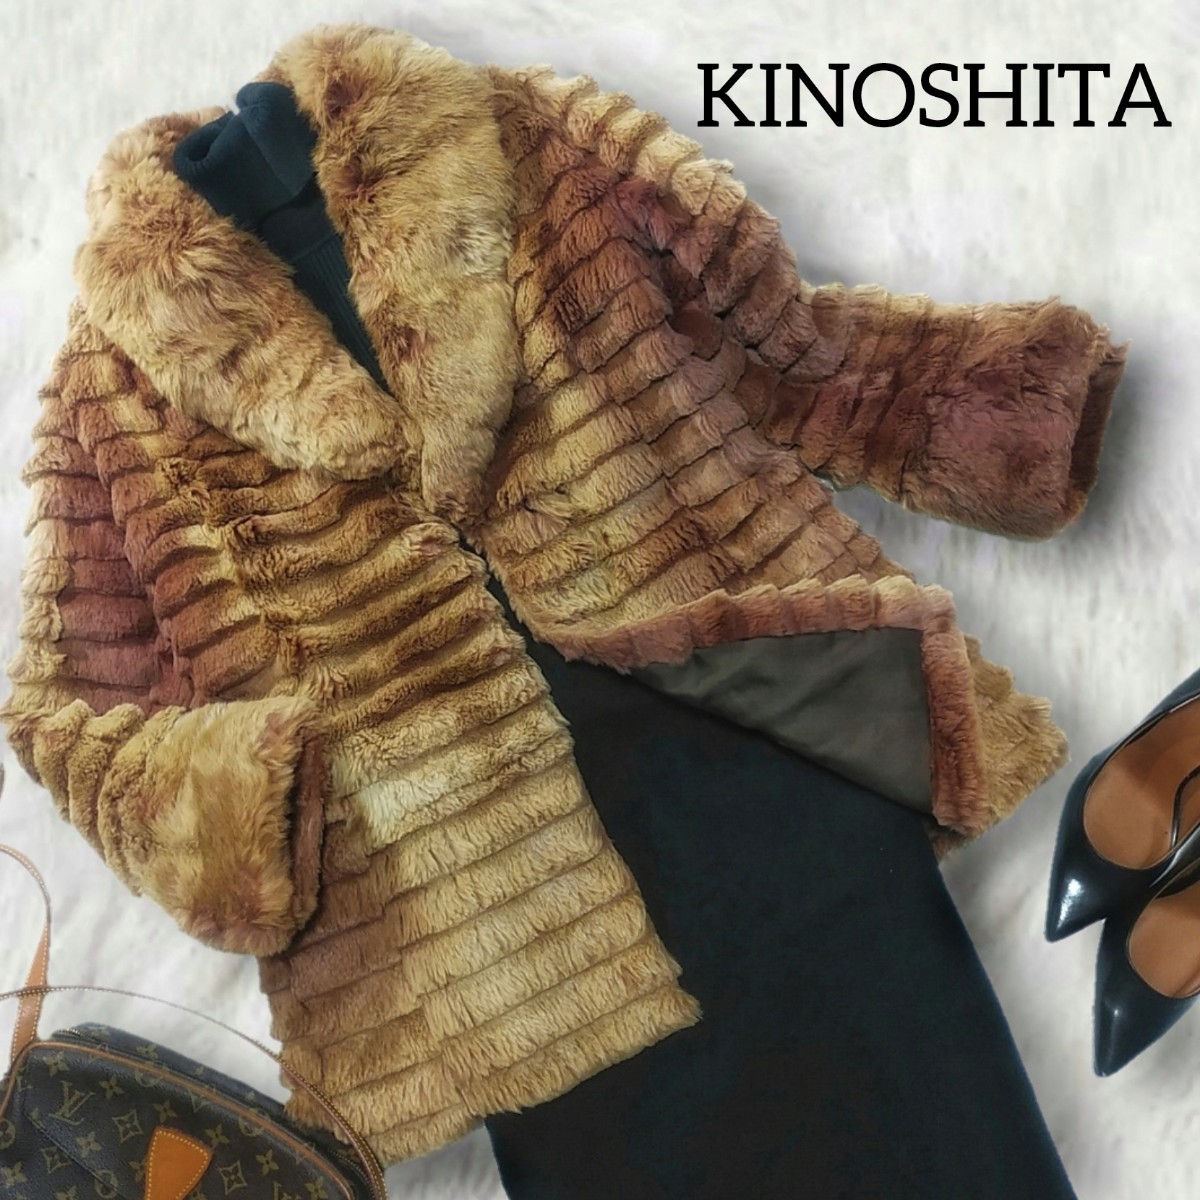 280 【KINOSHITA】 キノシタ ファーコート ブラウン ミックスカラー 毛皮コート アウター 個性的 段カット リアルファー レディース